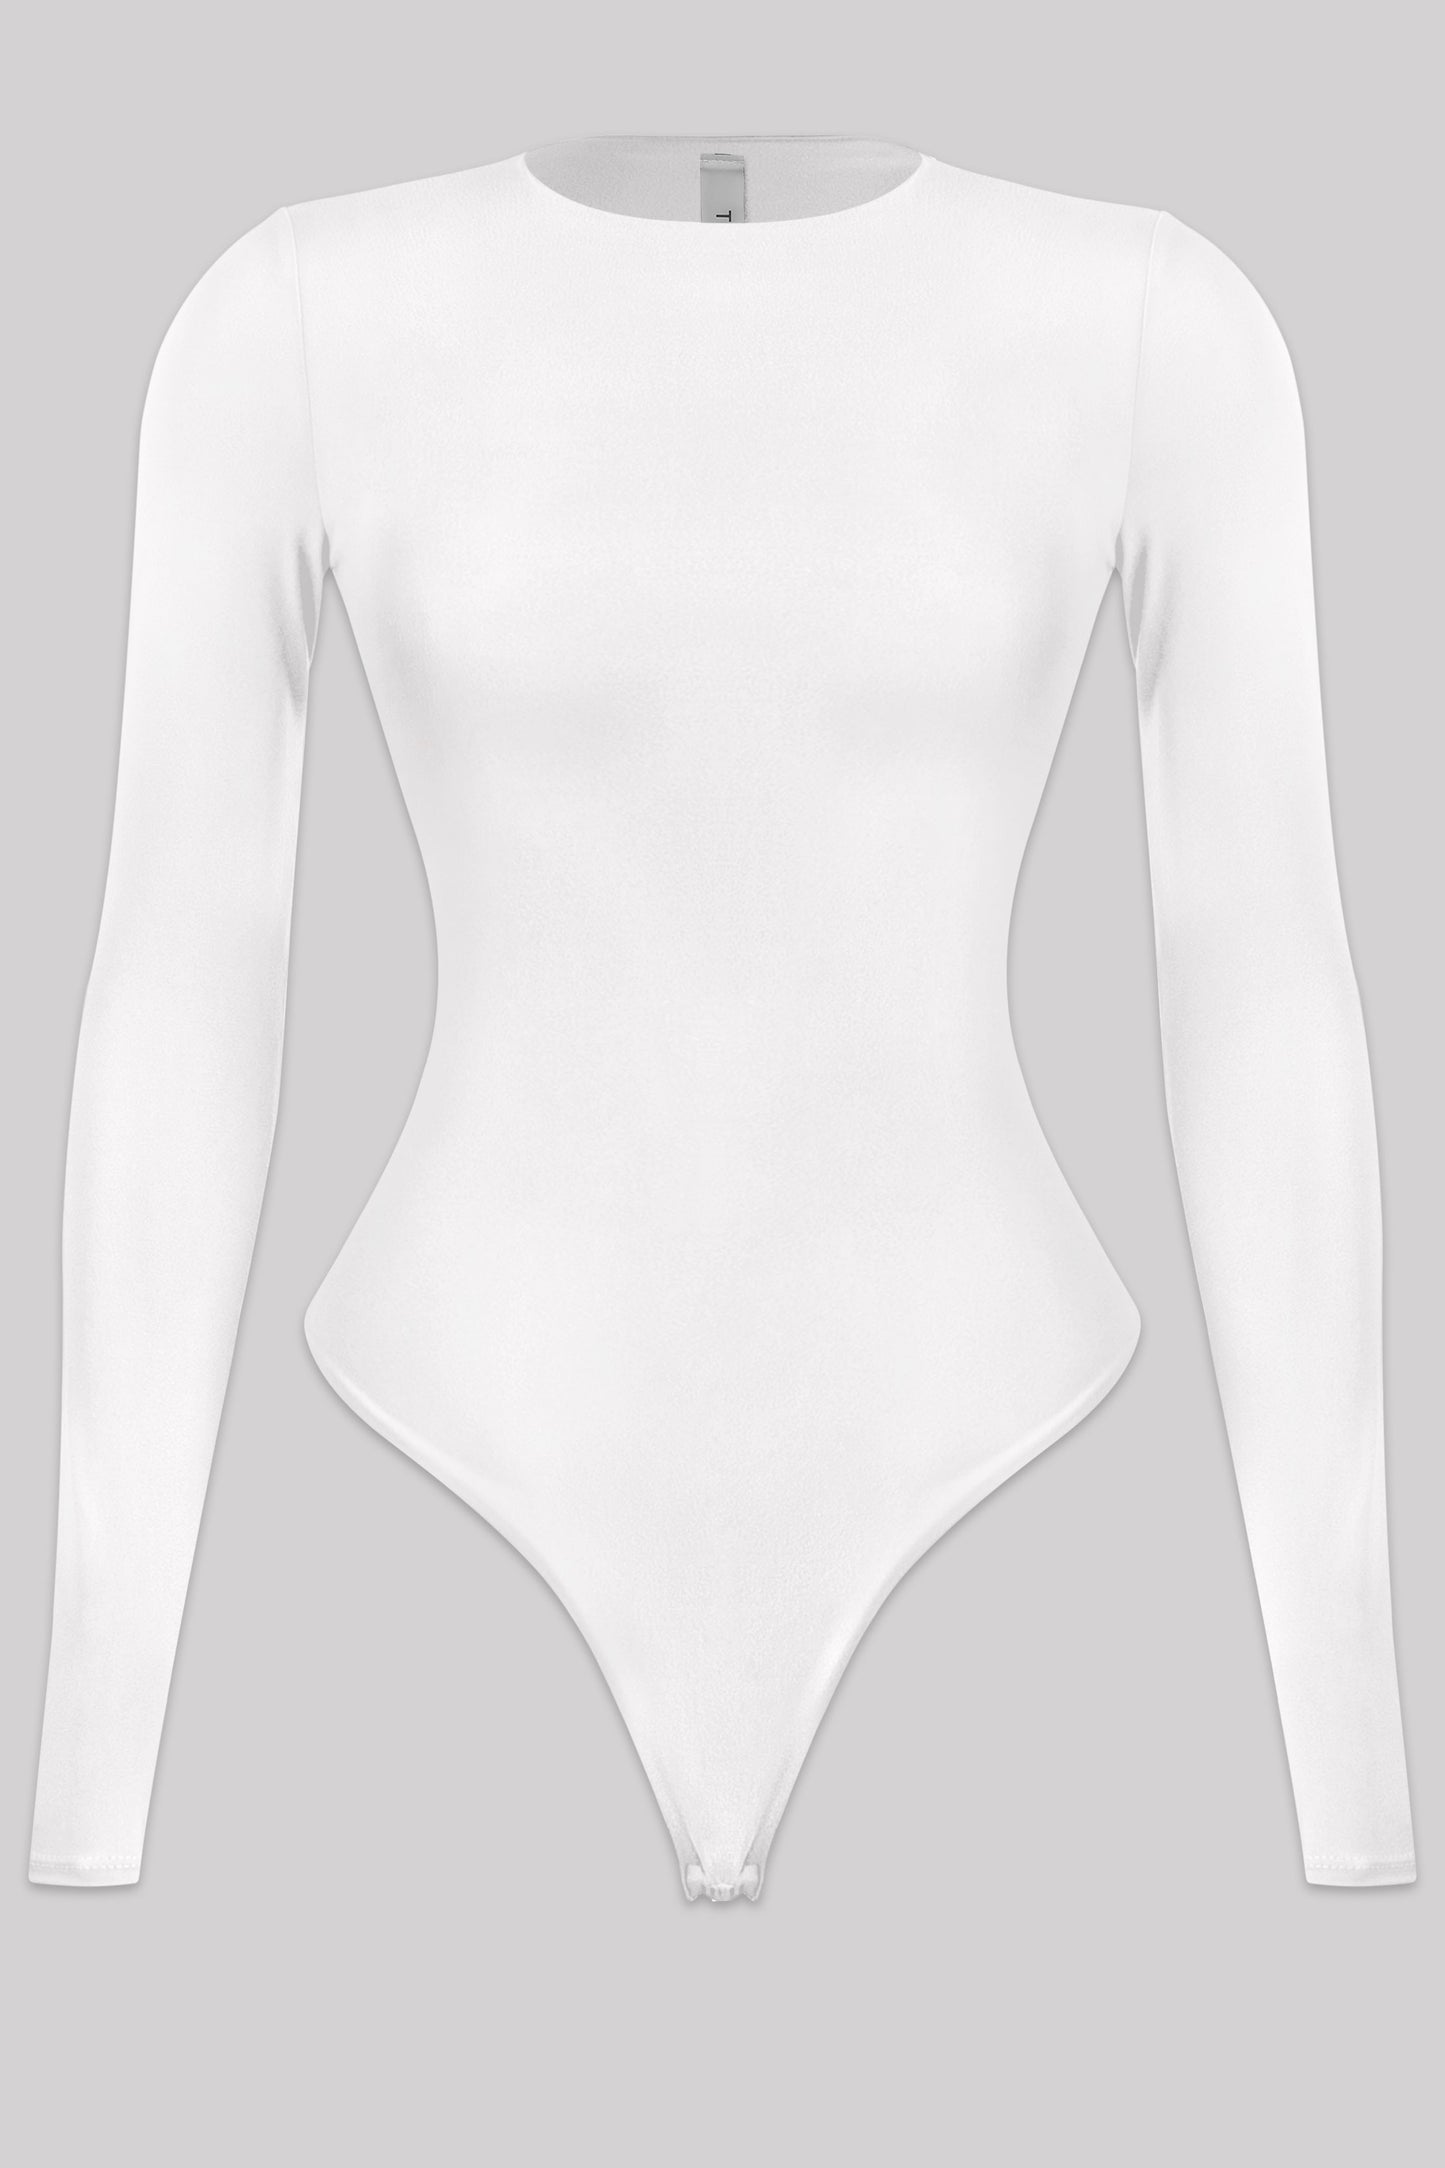 Skims double layered bodysuit- White